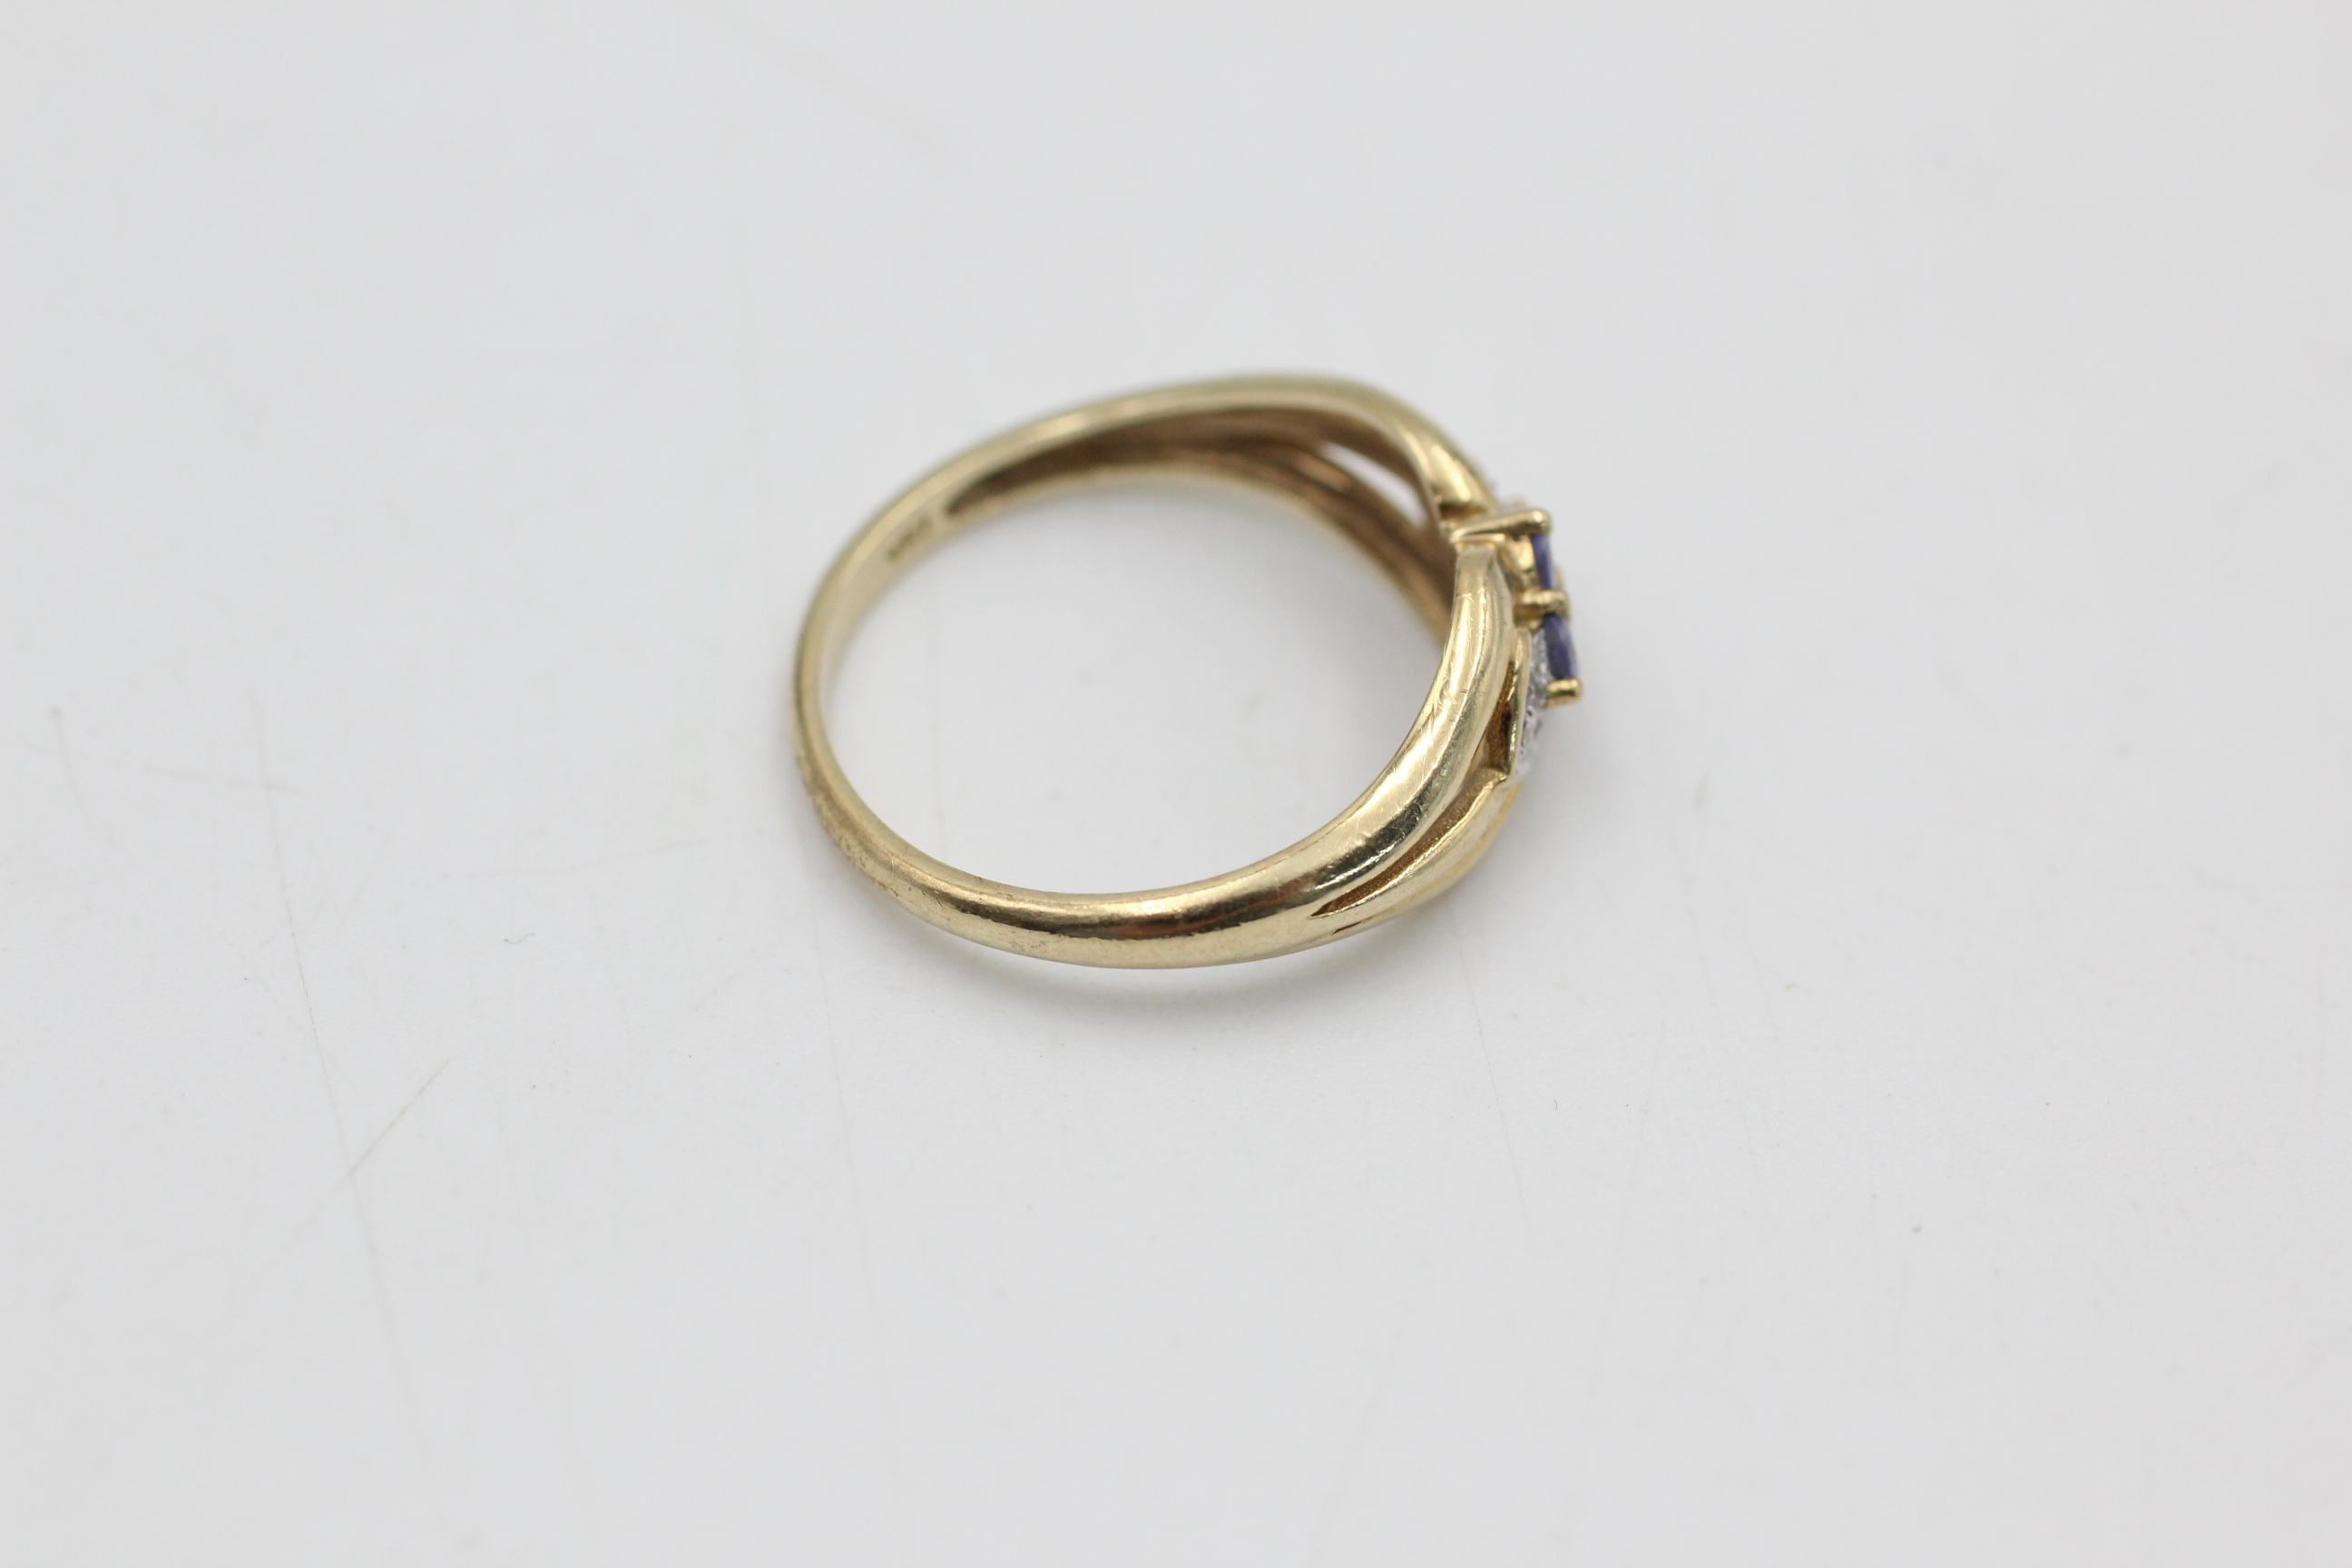 9ct gold diamond & gemstone ring (2g) - Image 4 of 5